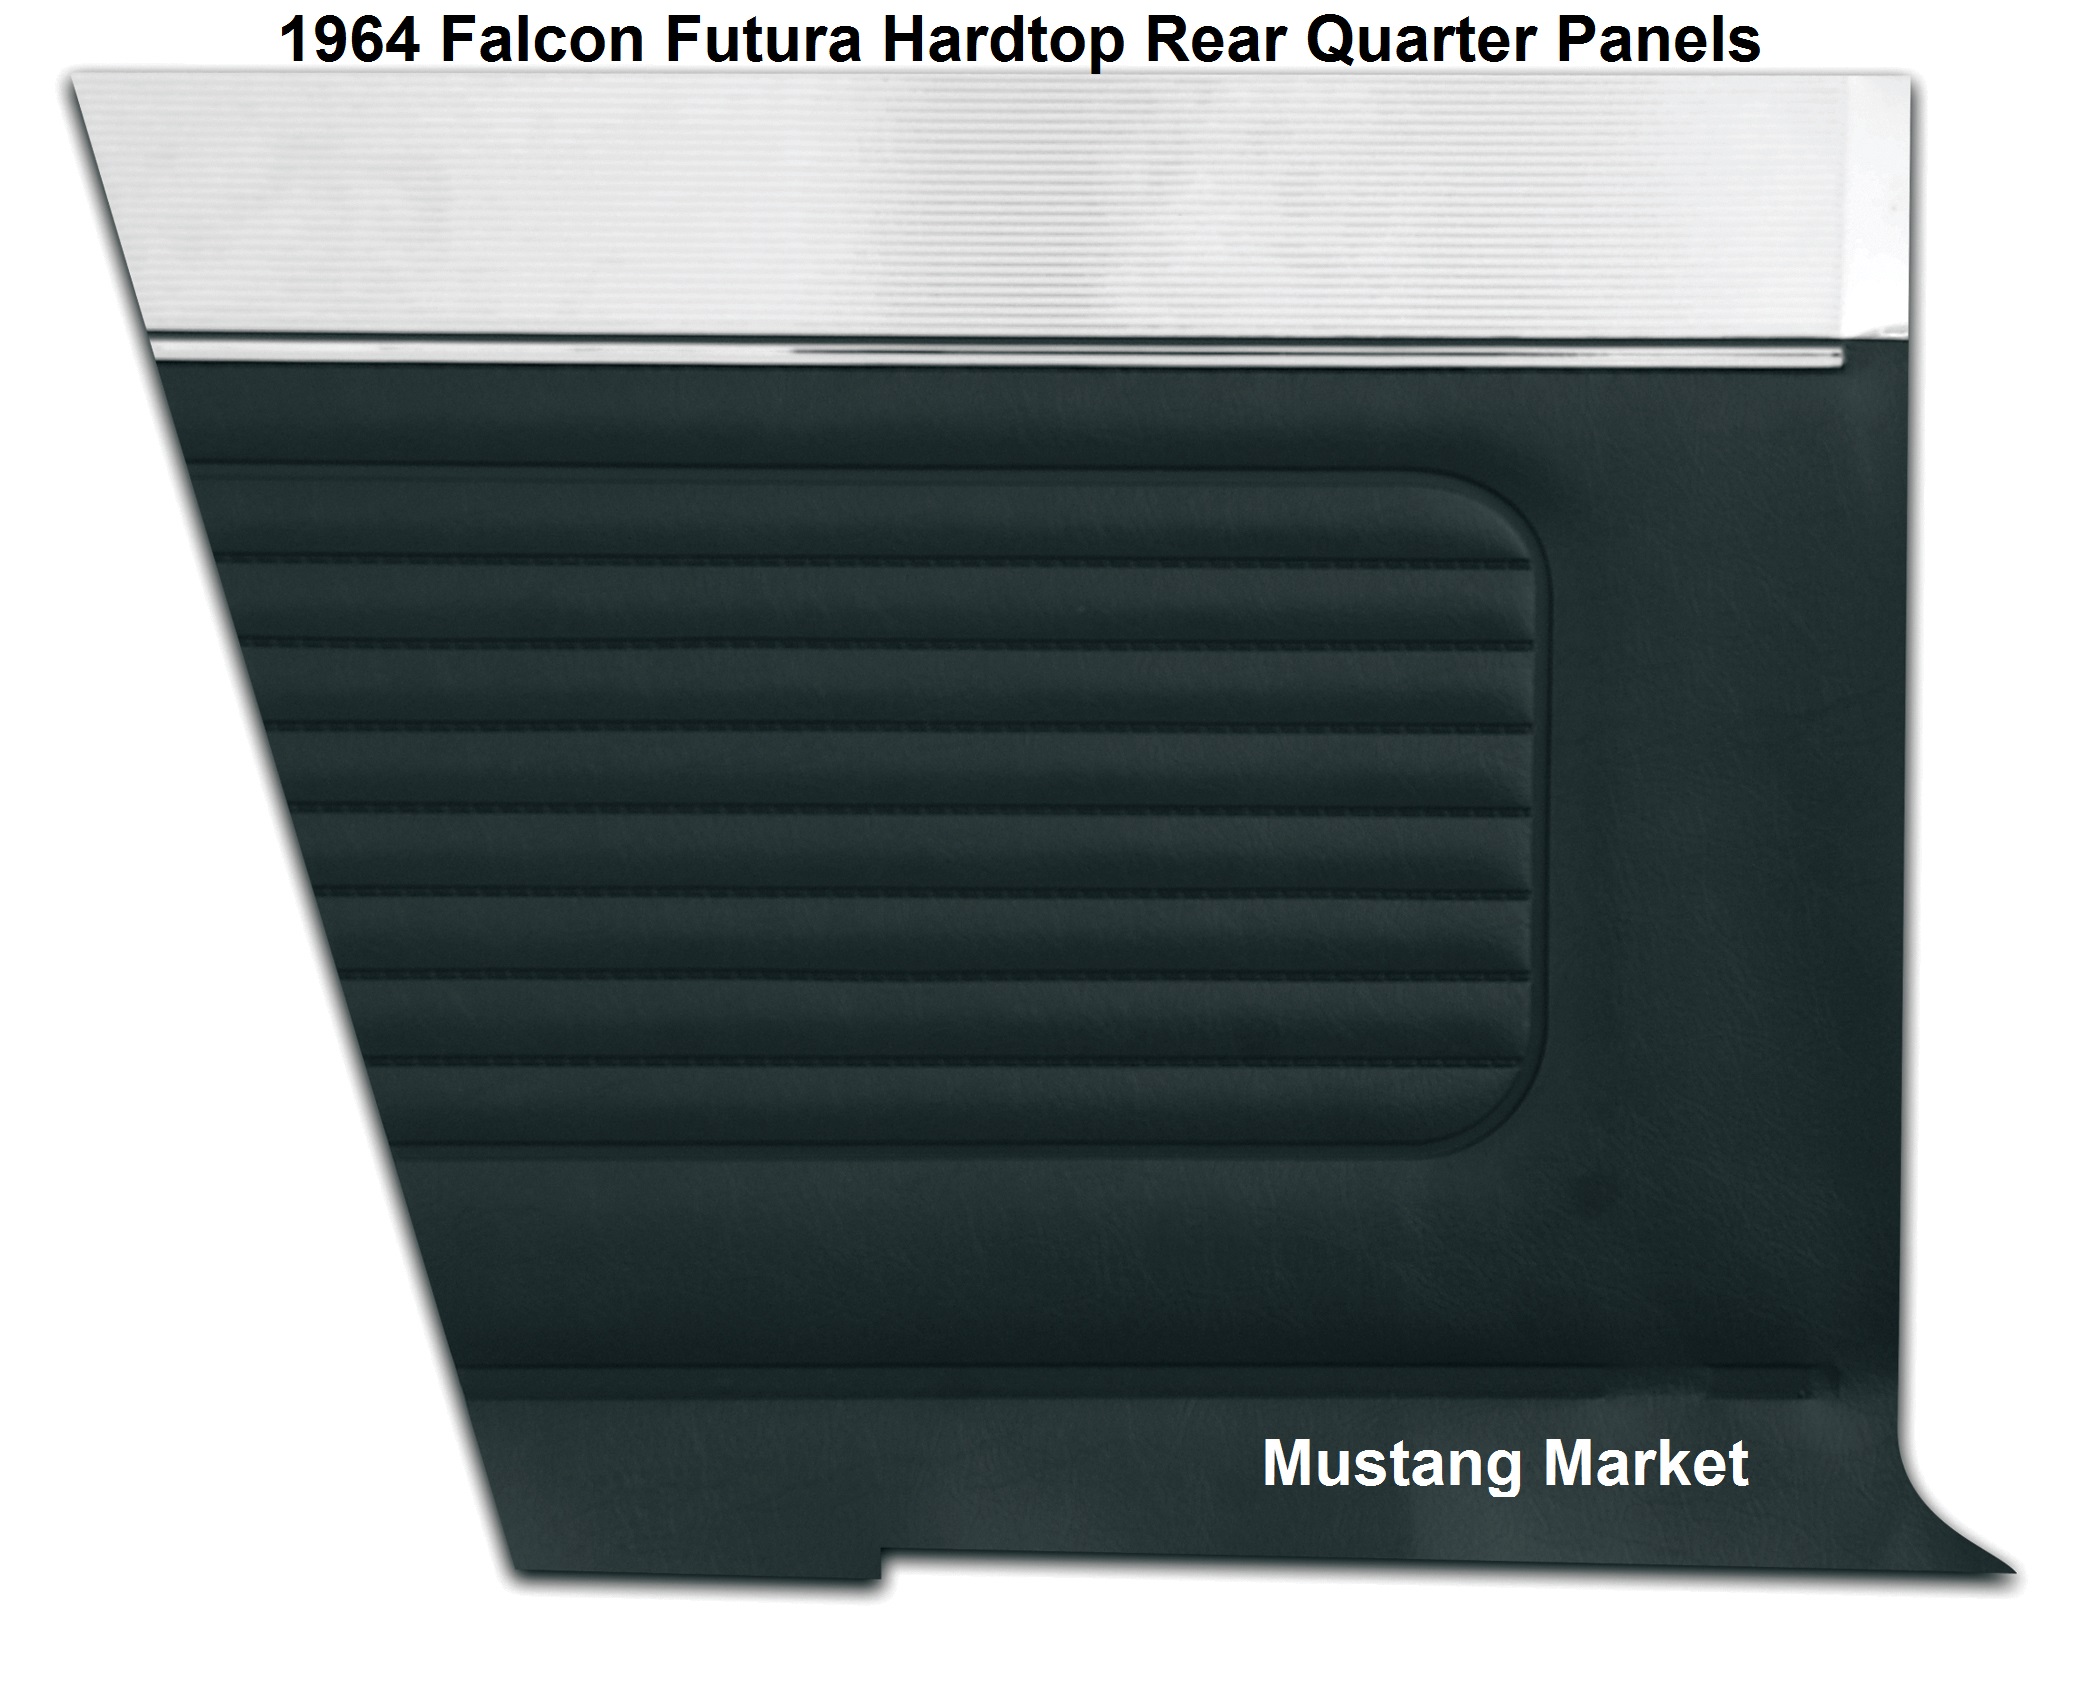 1964 Ford falcon rear quarter panels